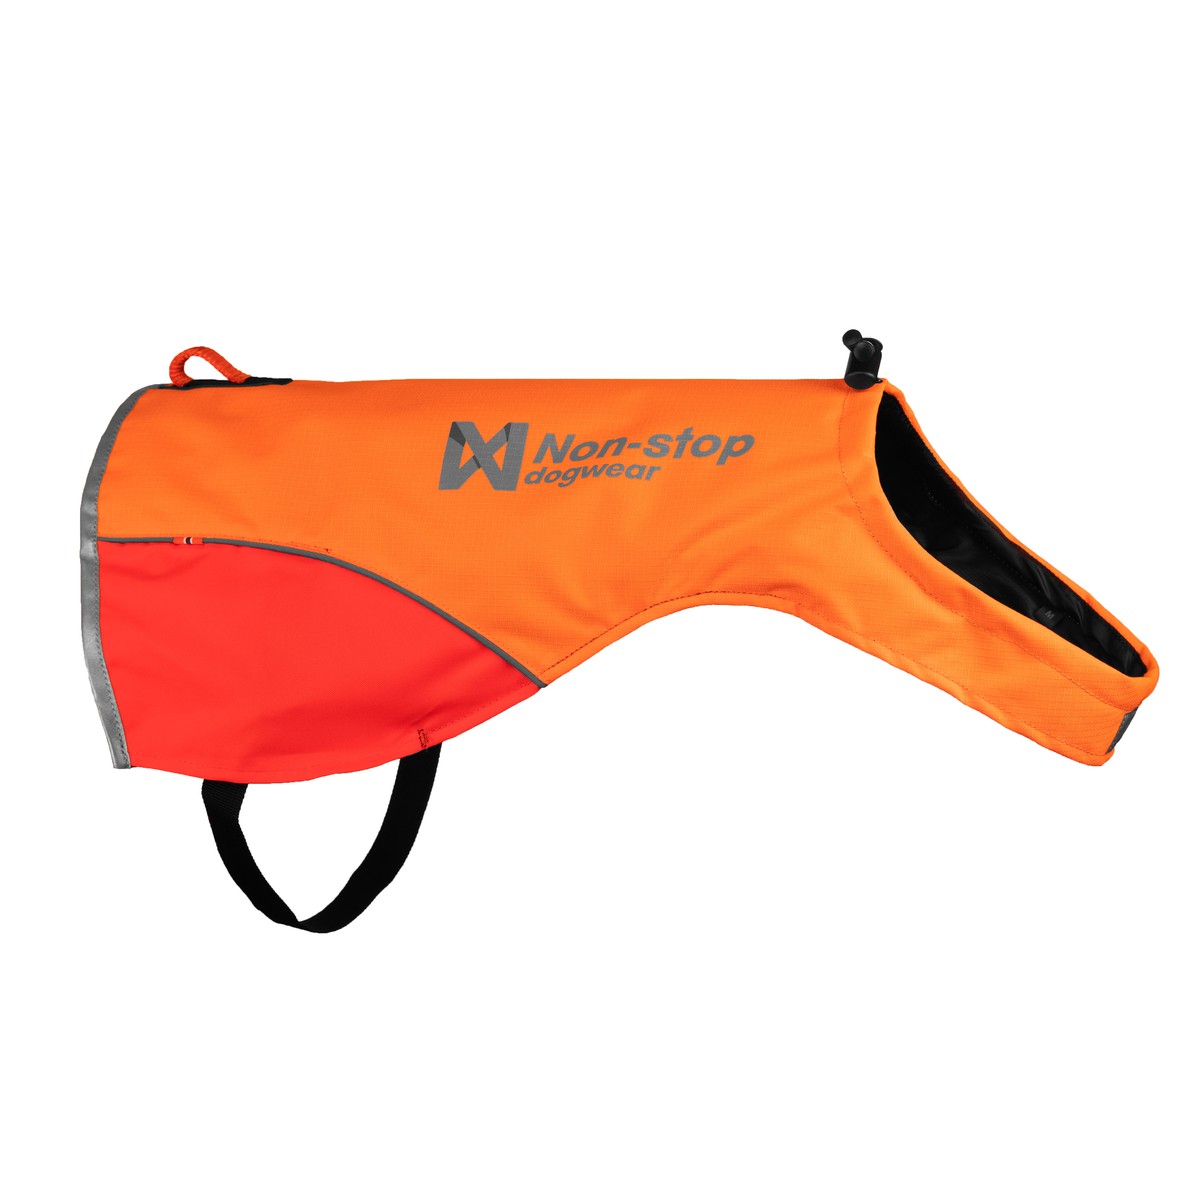 Non-Stop dogwear Protector Veste Protector M Orange M